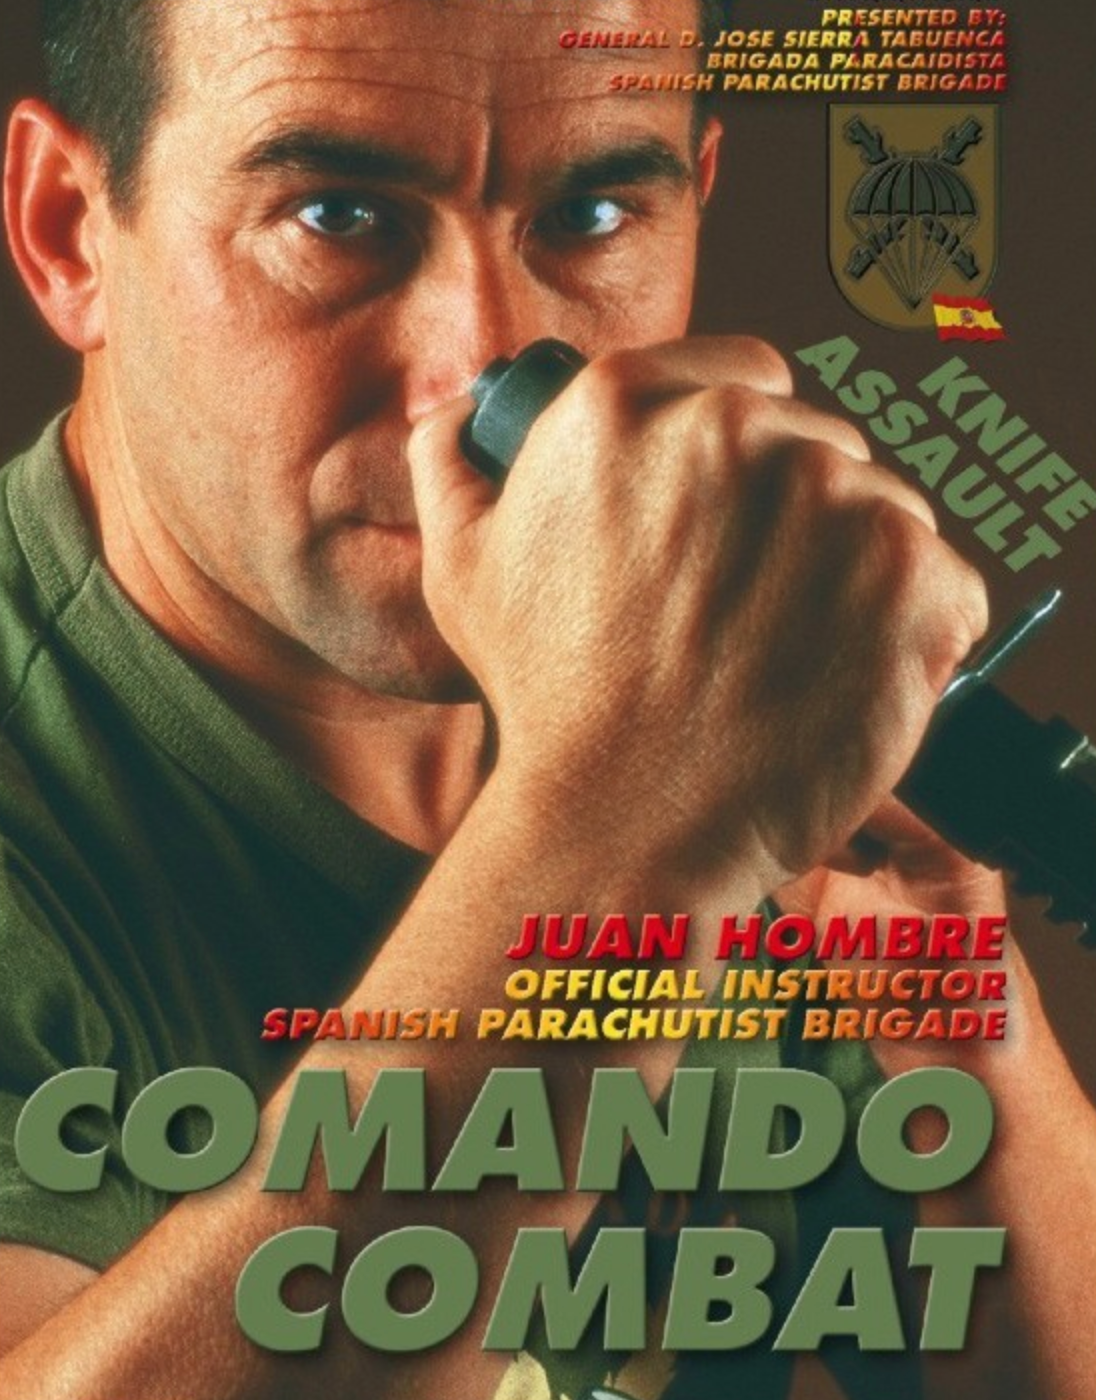 Commando Combat Knife Assault DVD with Juan Hombre - Budovideos Inc